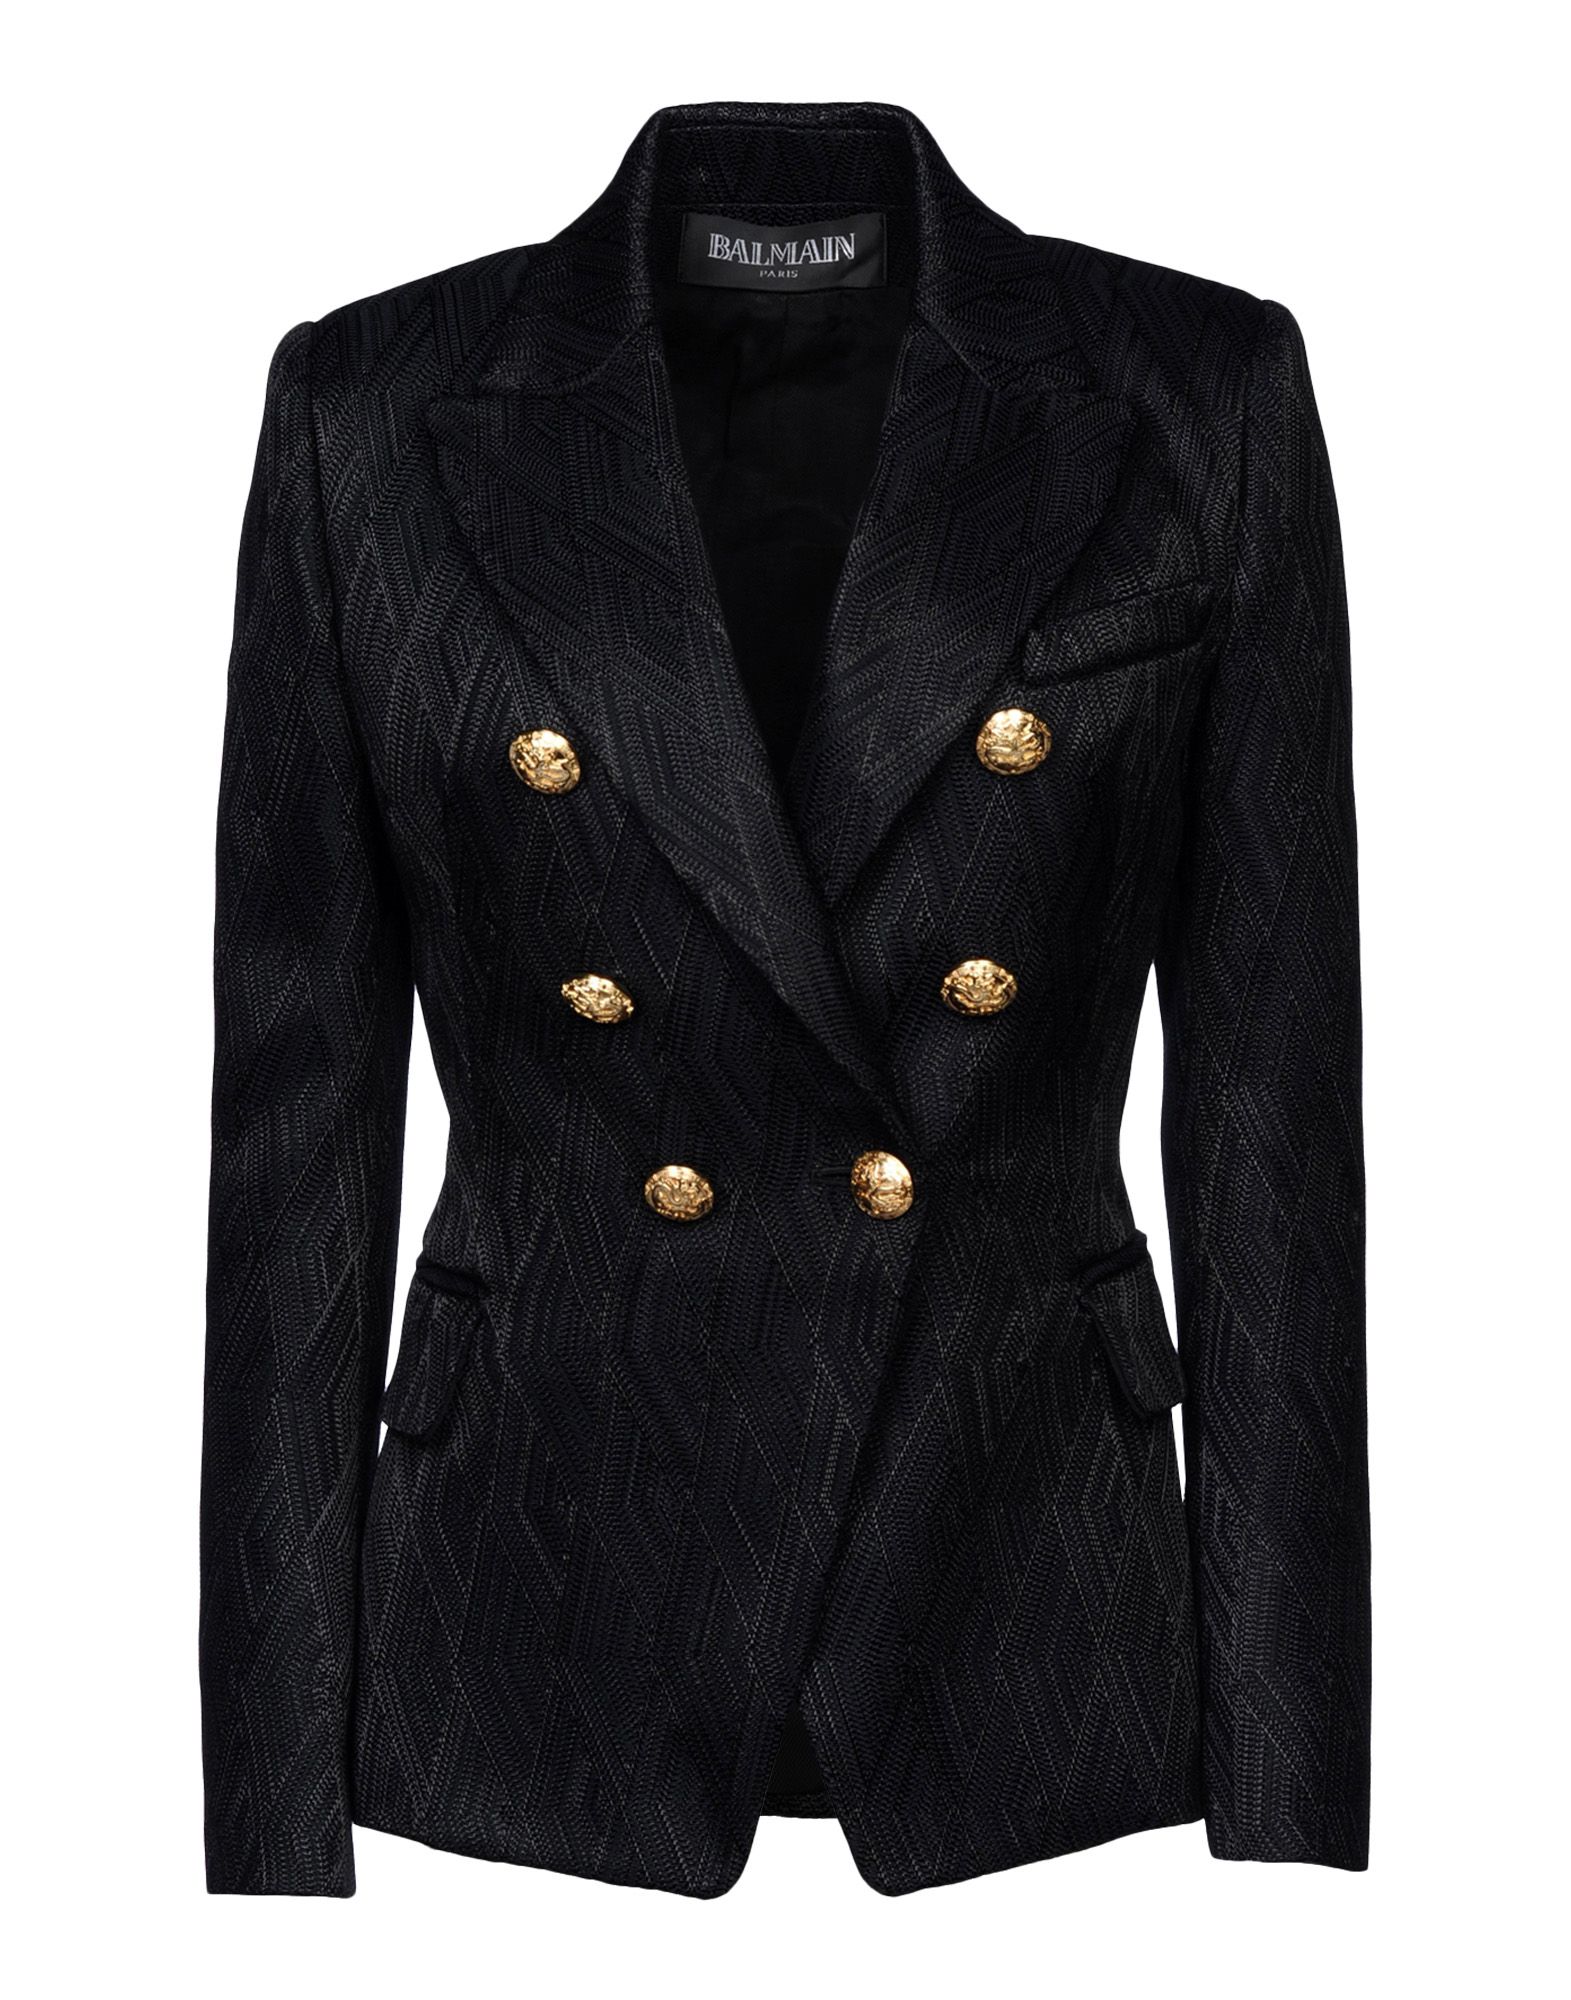 Balmain Cotton Virgin Wool Jacket in Black - Lyst